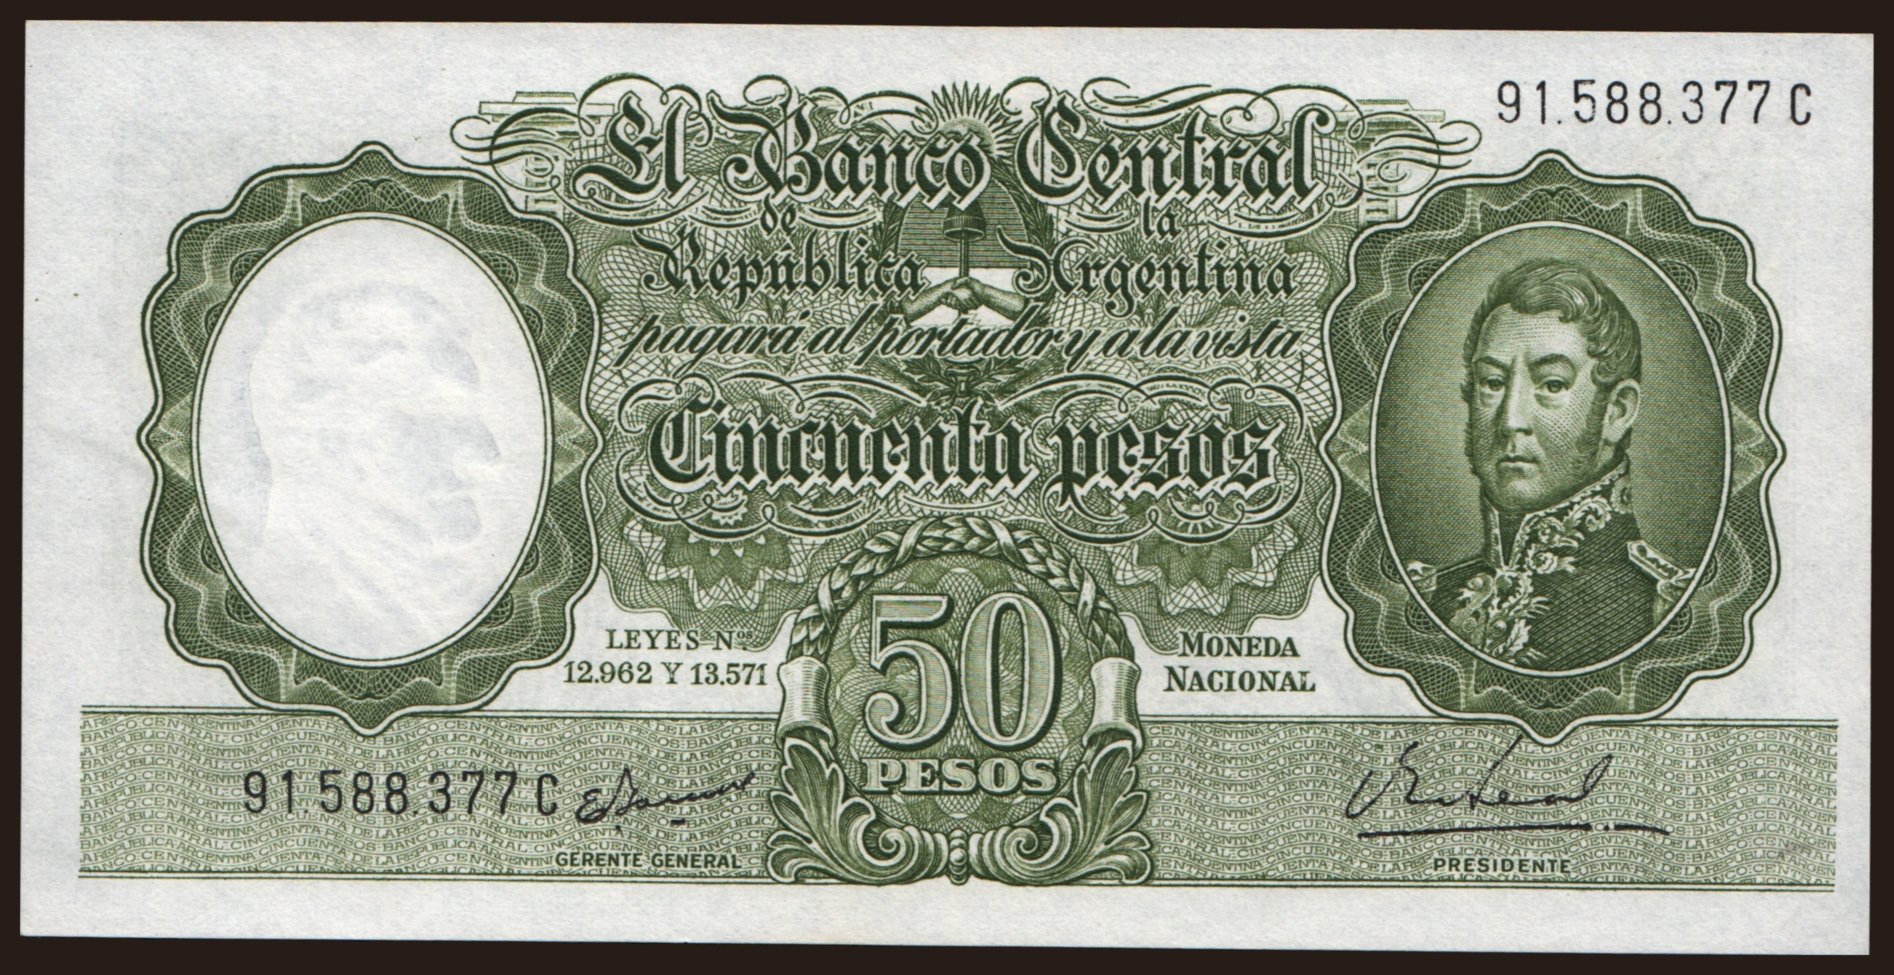 50 pesos, 1955